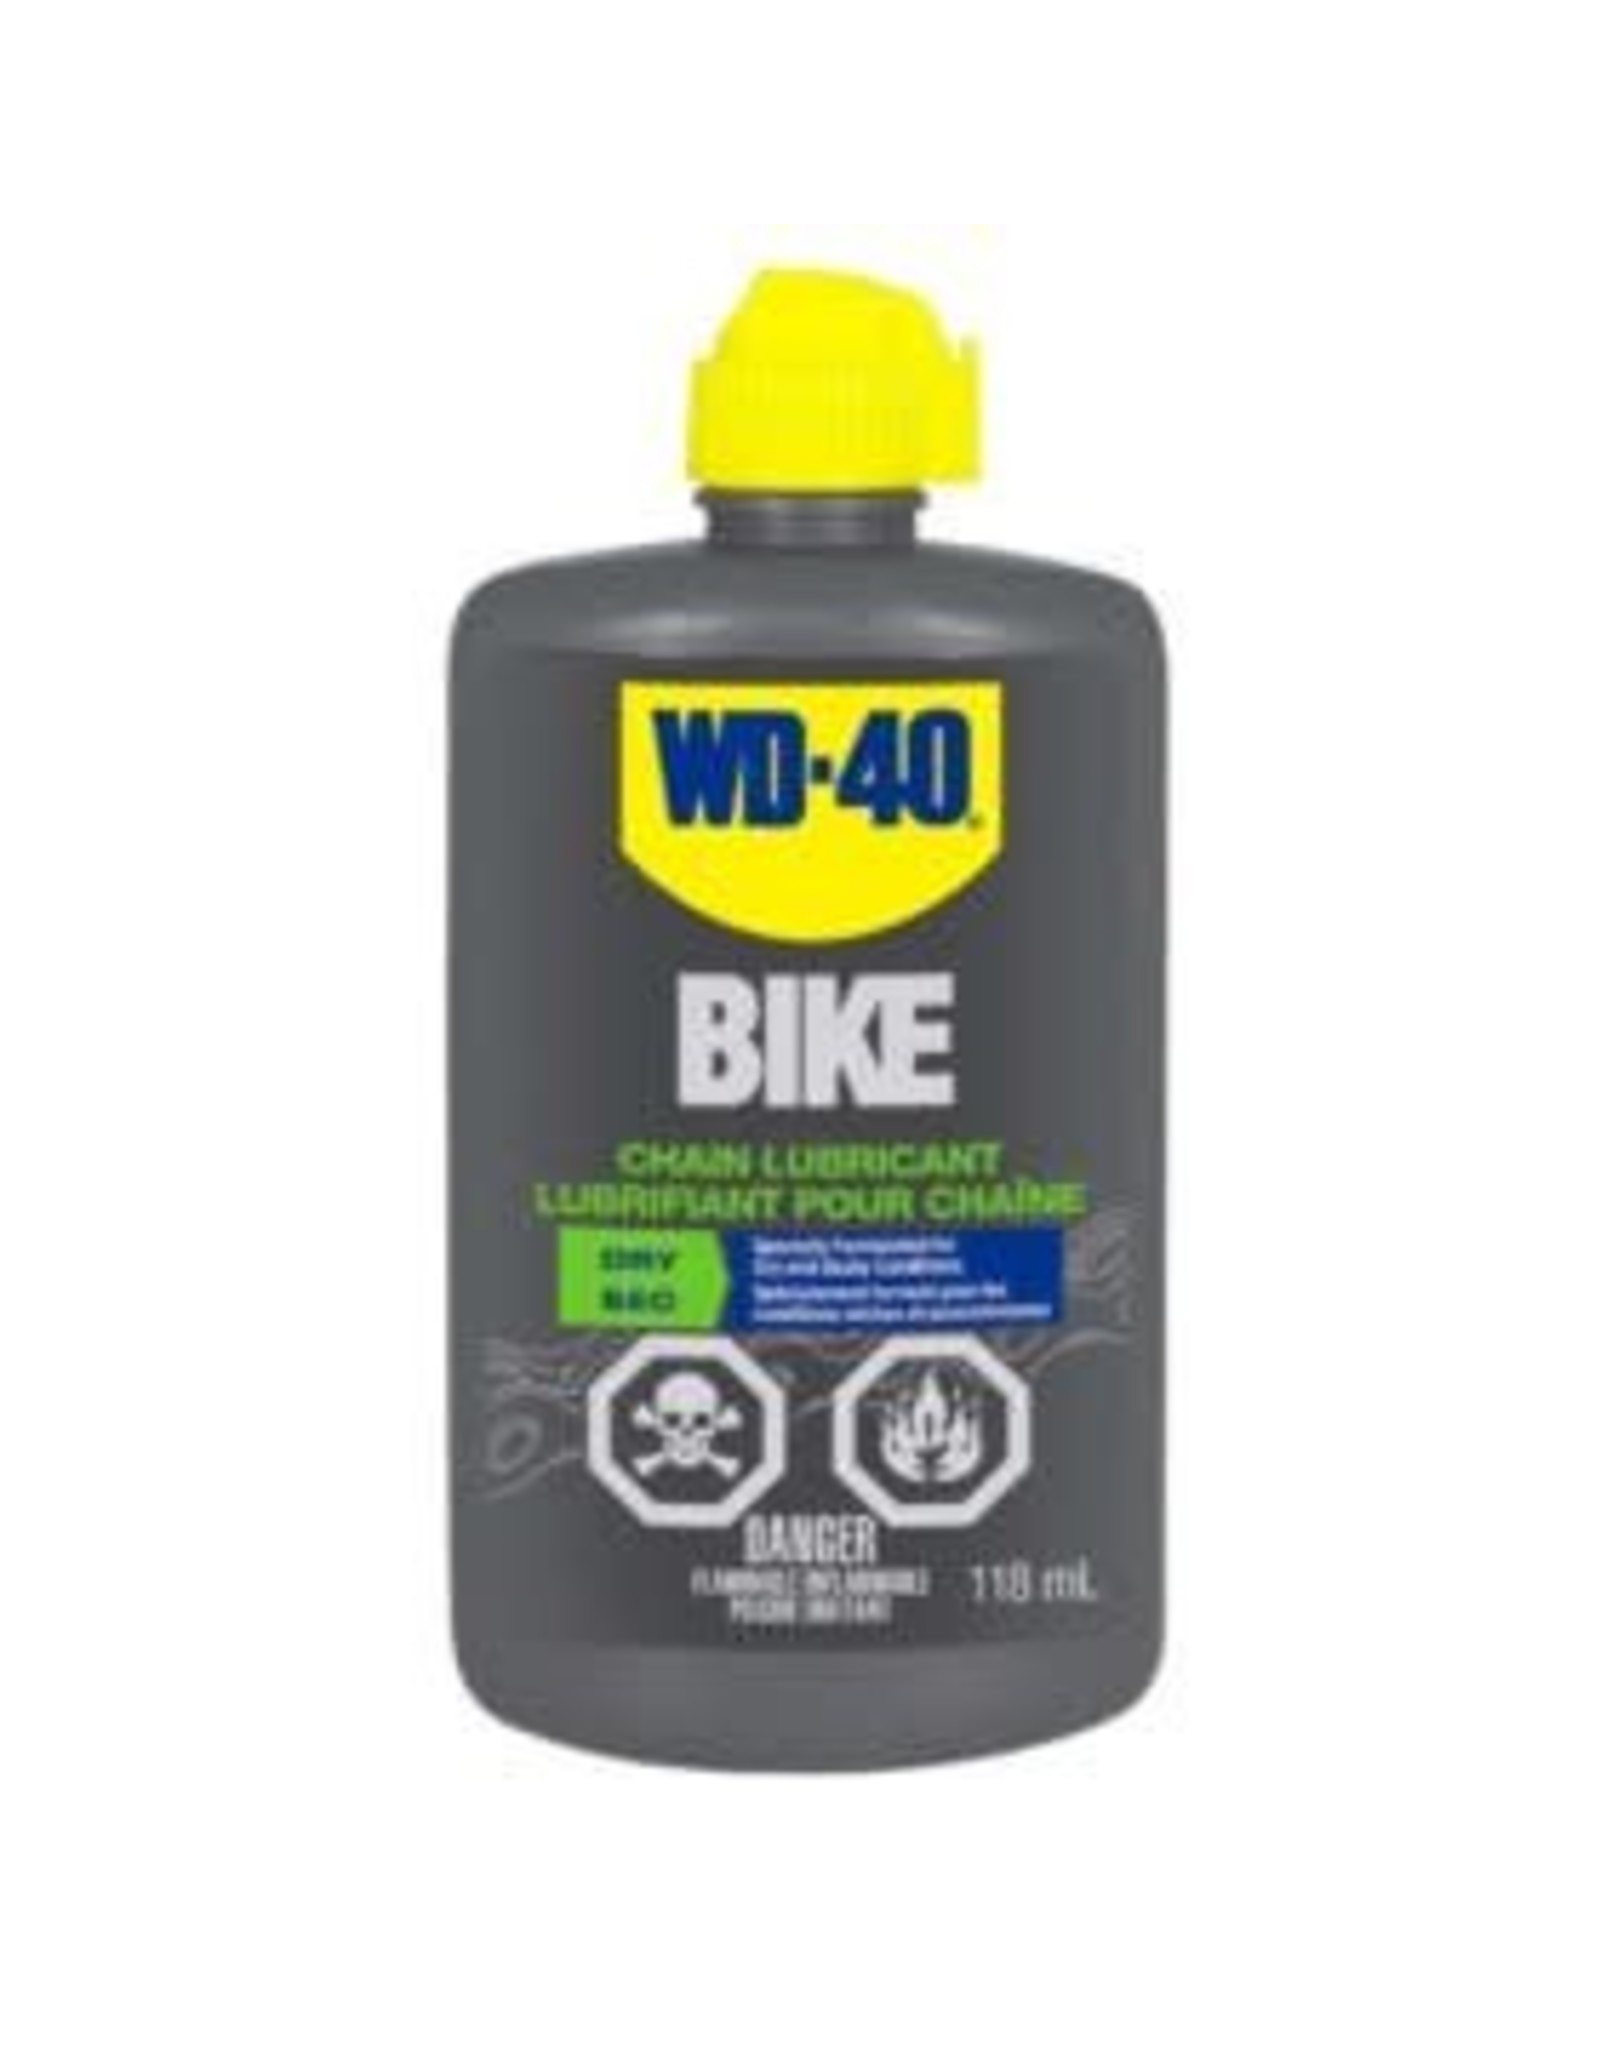 WD-40 Bike Chain Lubricant - Dry